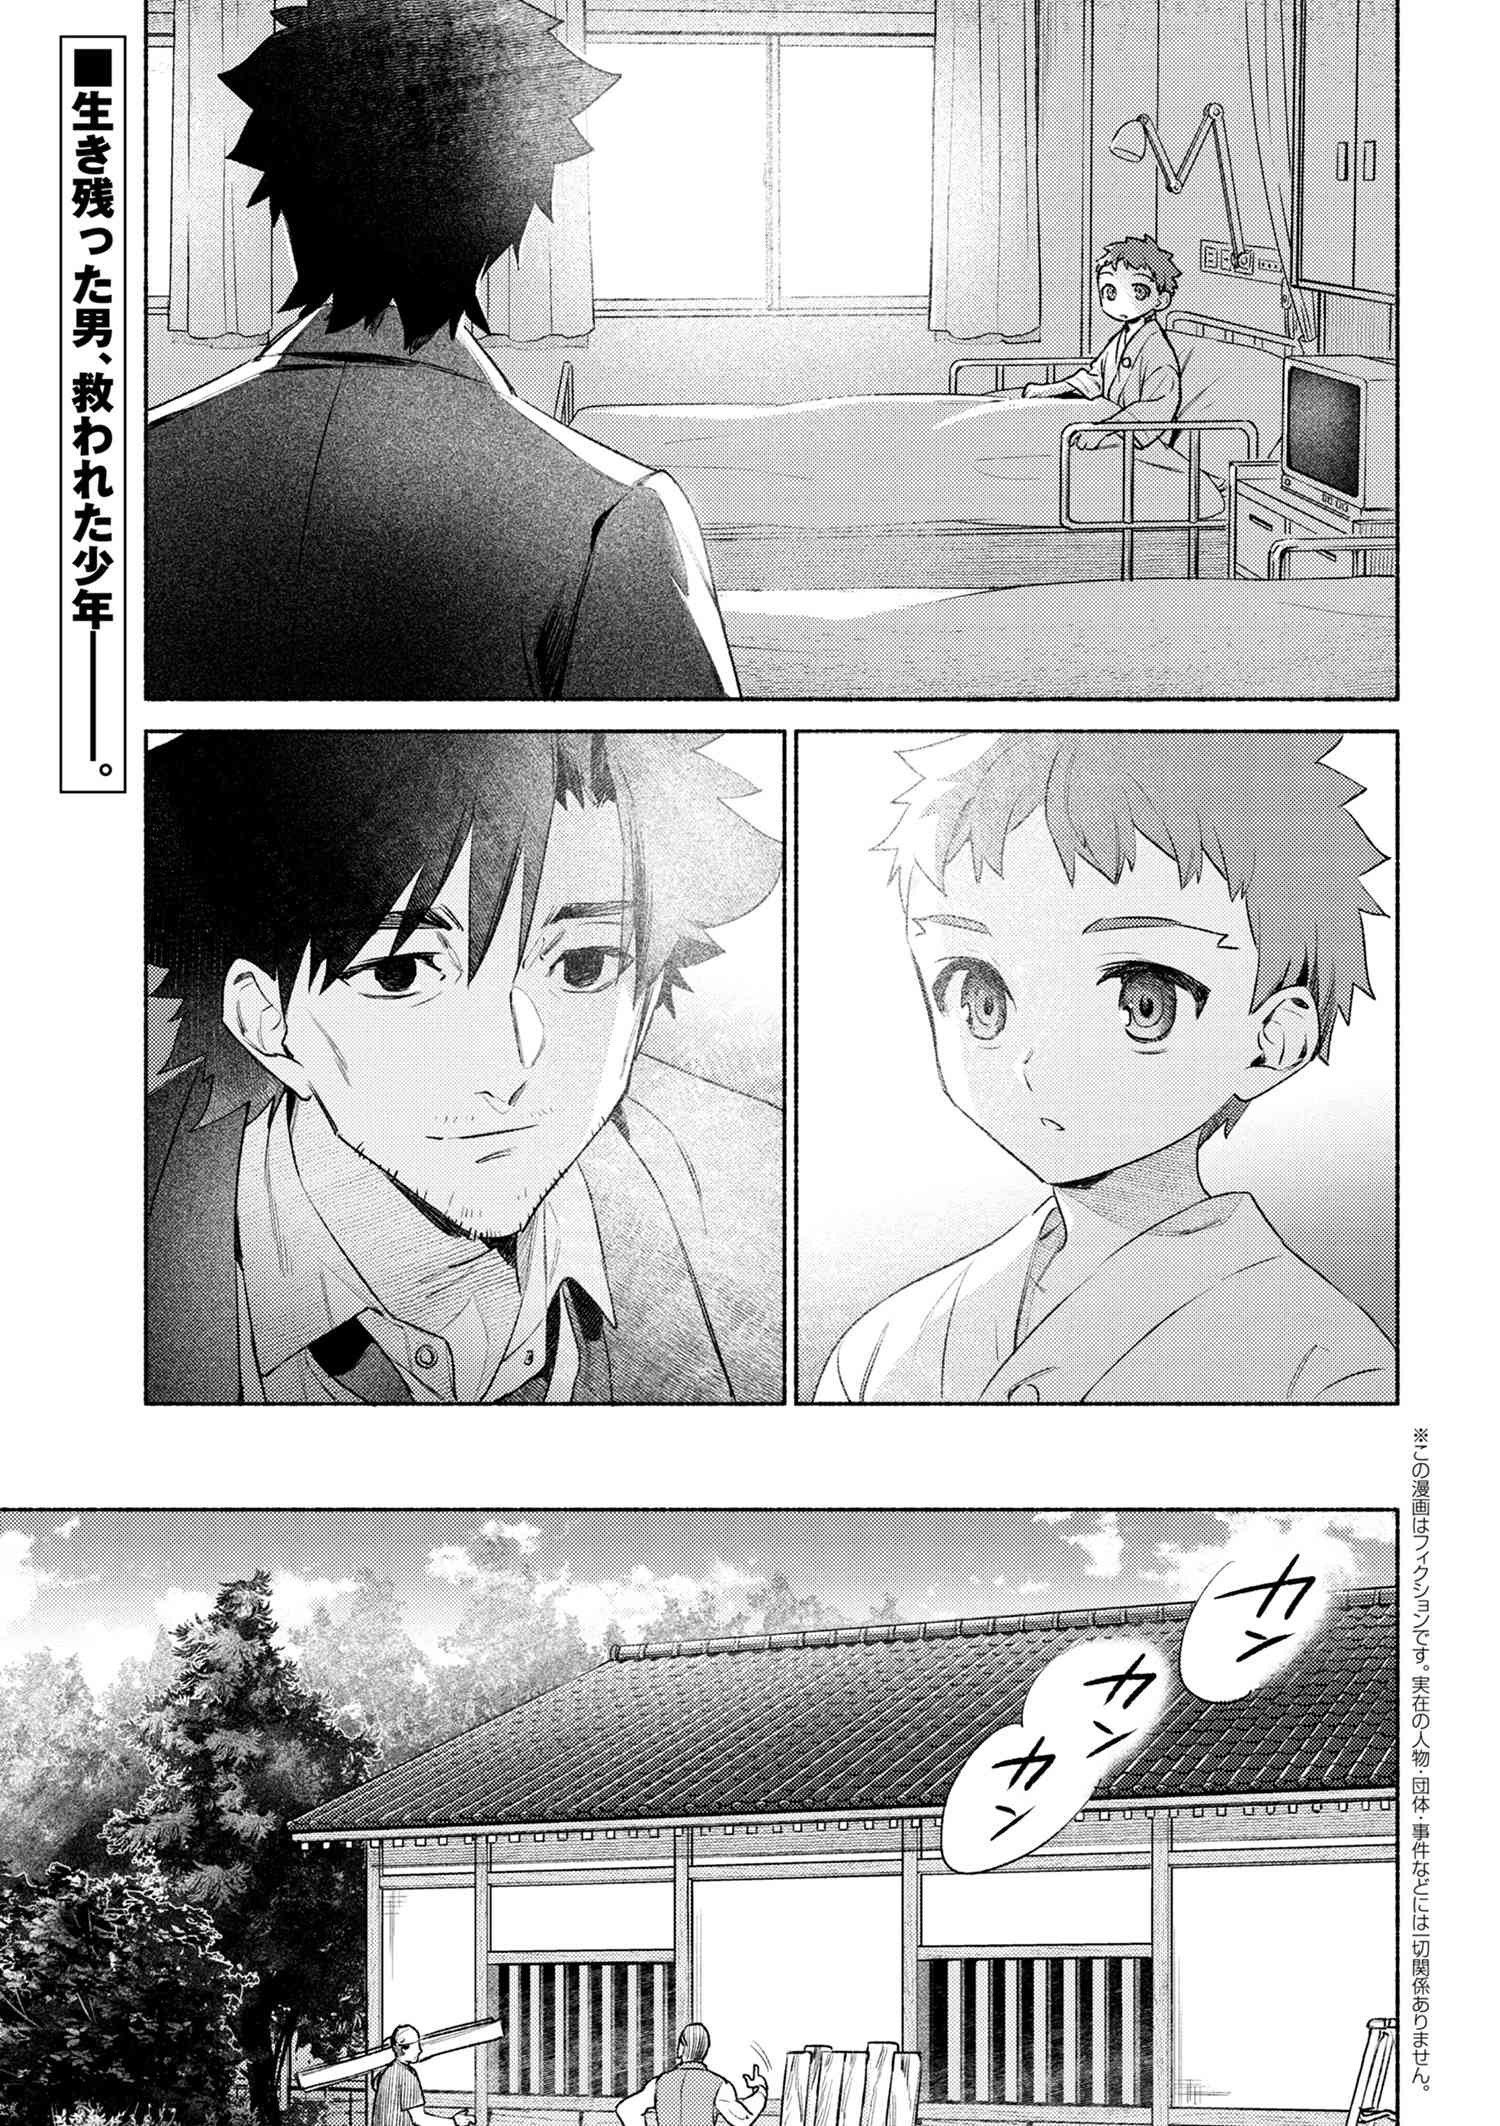 Emiya-san Chi no Kyou no Gohan - Chapter 53 - Page 1